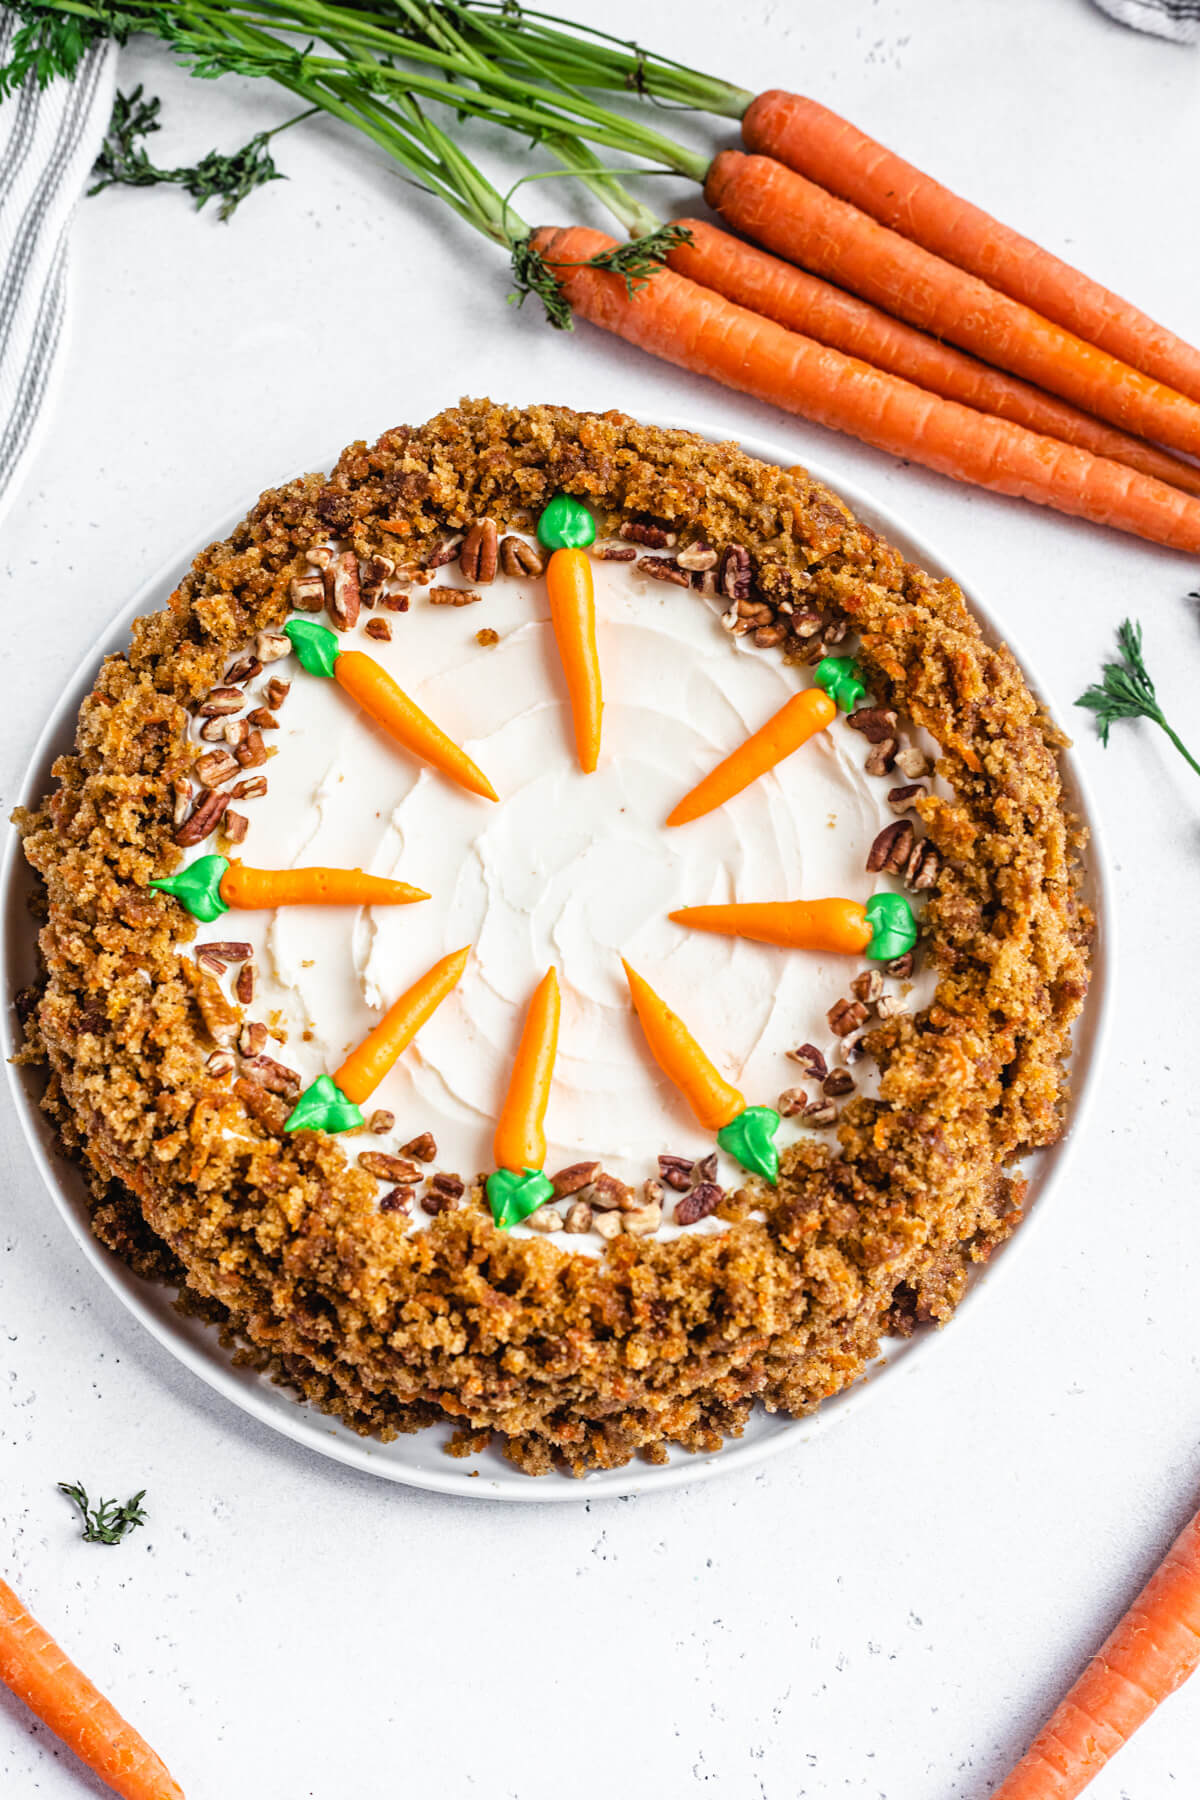 https://www.queensleeappetit.com/wp-content/uploads/2020/03/carrot-cake-cheesecake-recipe-queensleeappetit.com-6.jpg